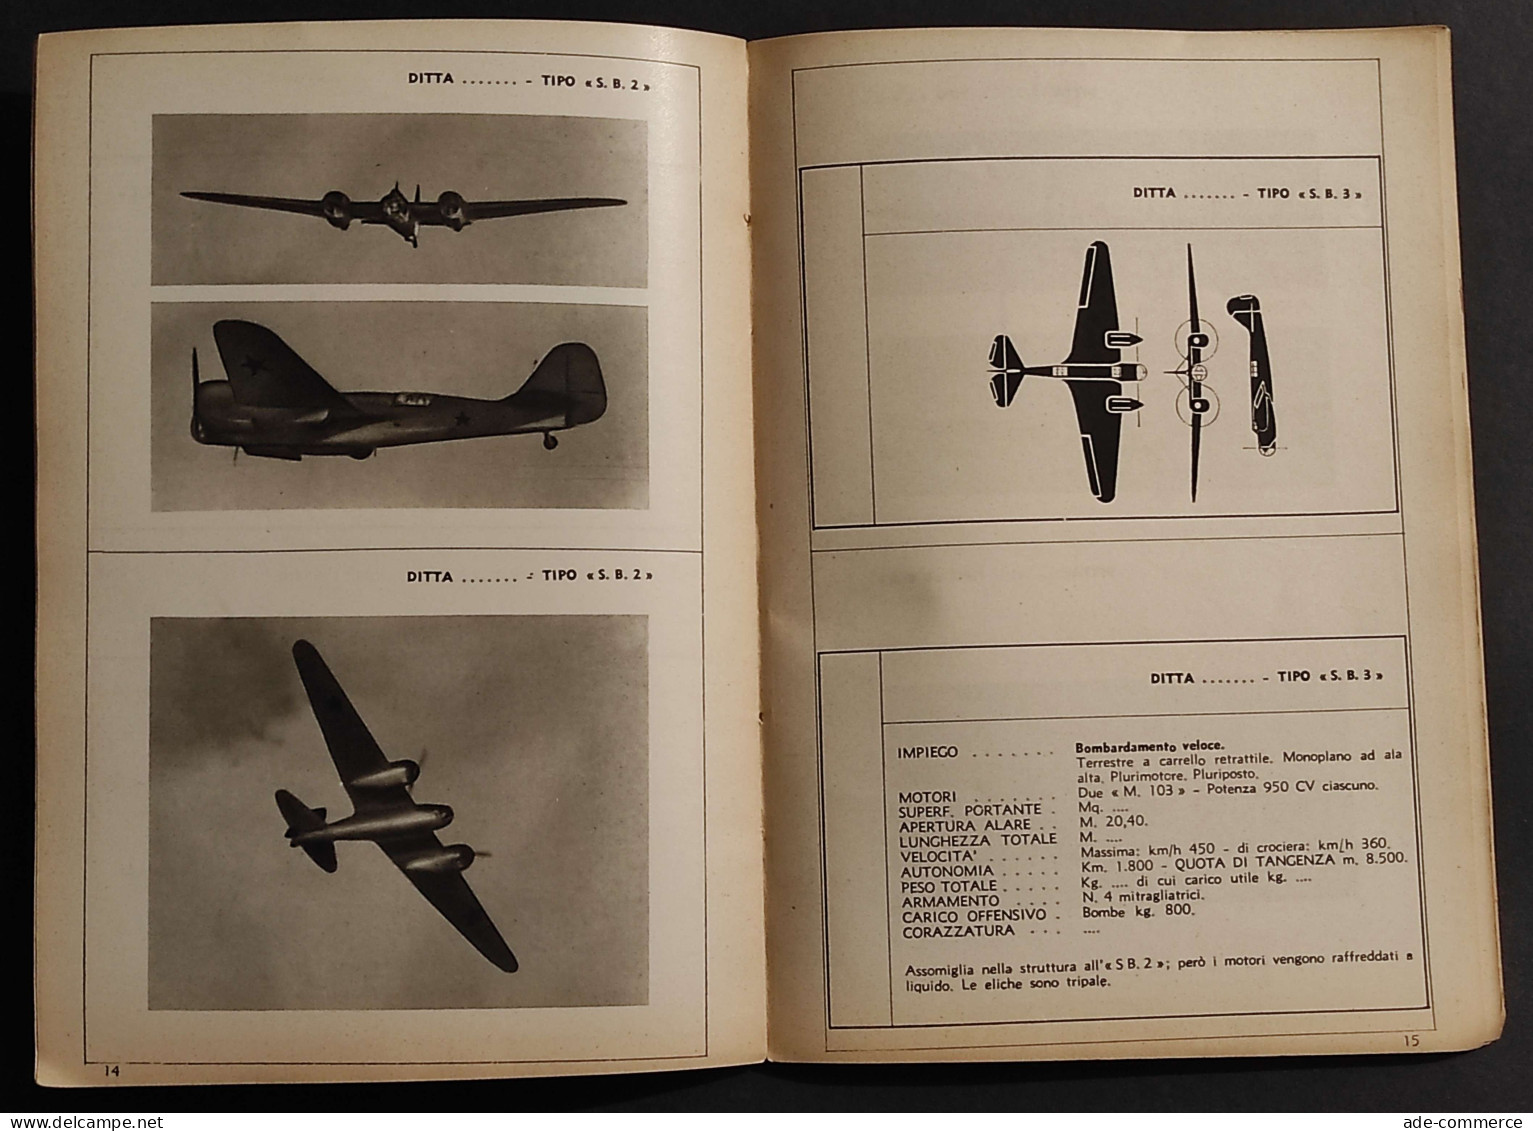 Ecco Il Nemico 15 - Velivoli Sovietici - Ed. Aeronautico - 1942 - Motoren